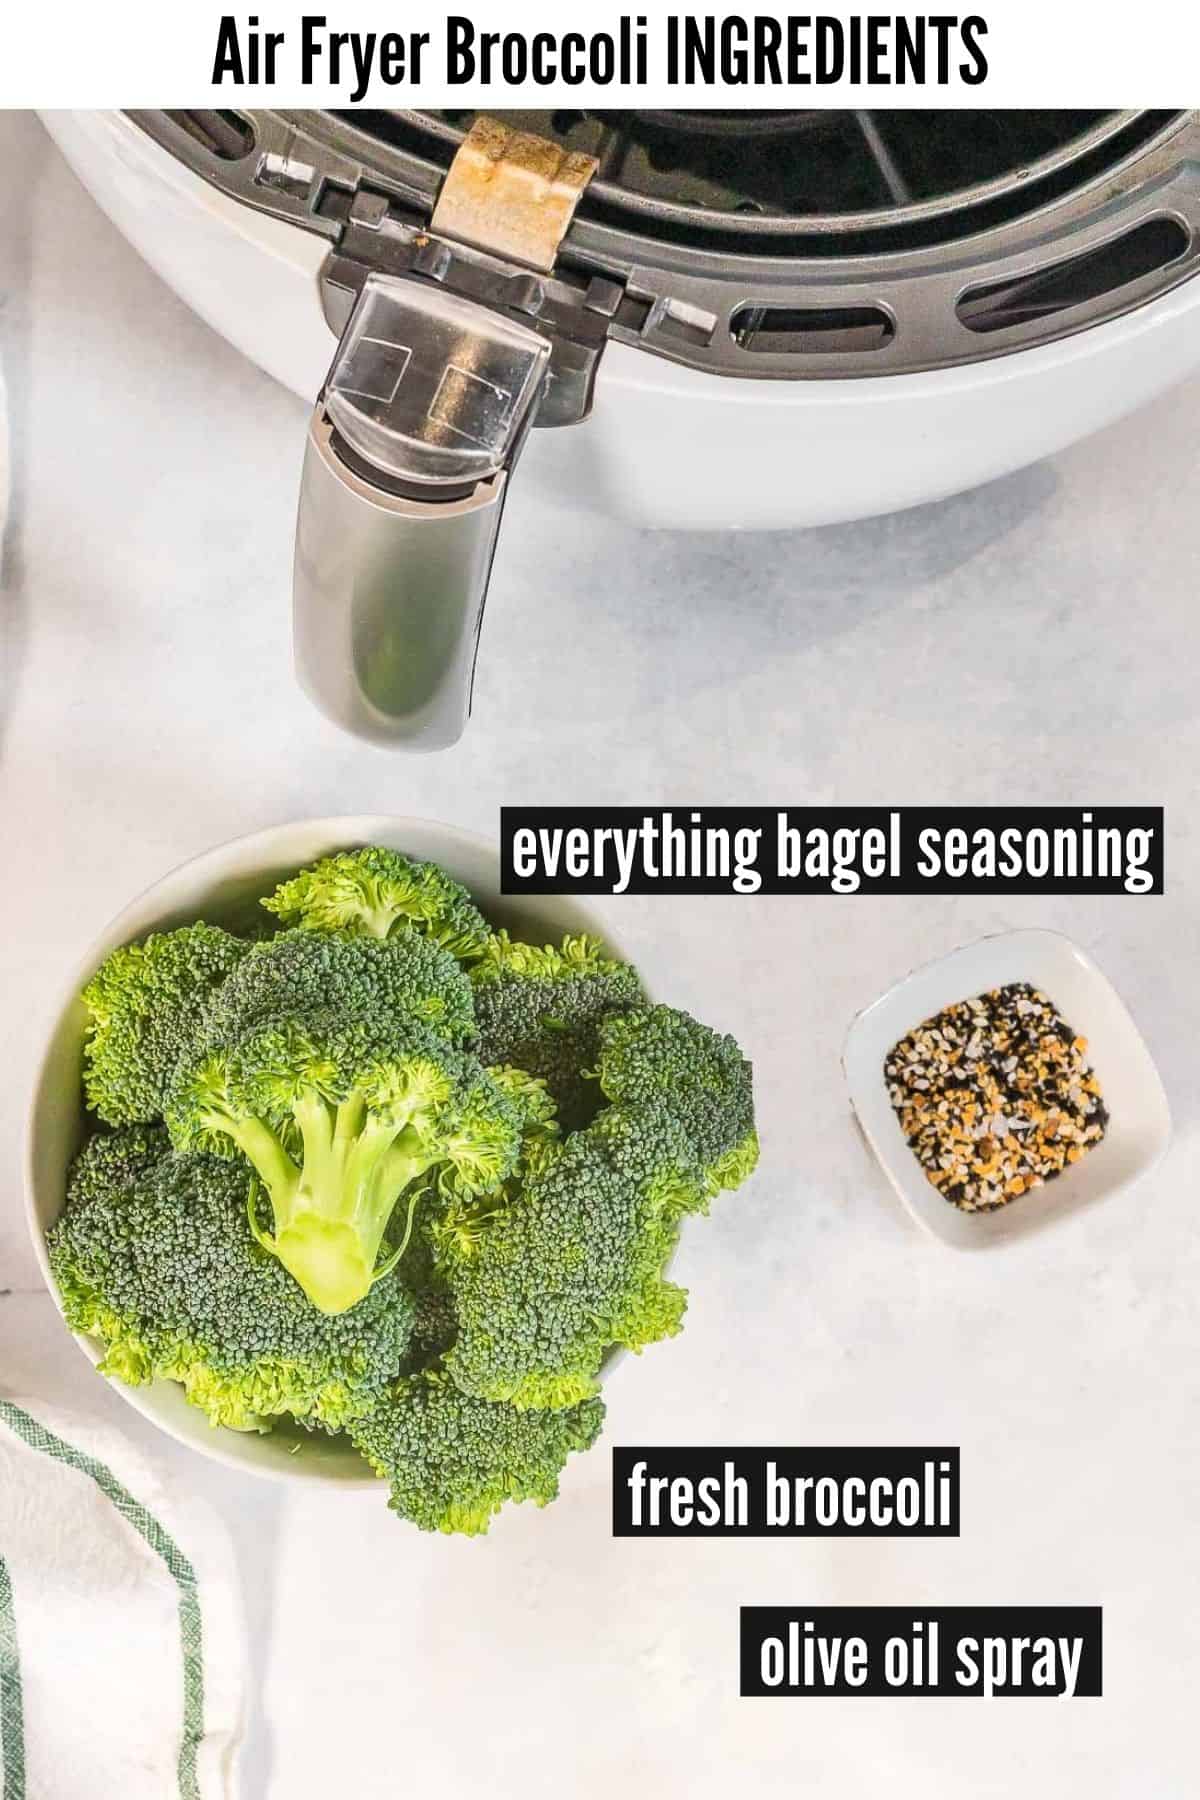 air fryer broccoli labelled ingredients